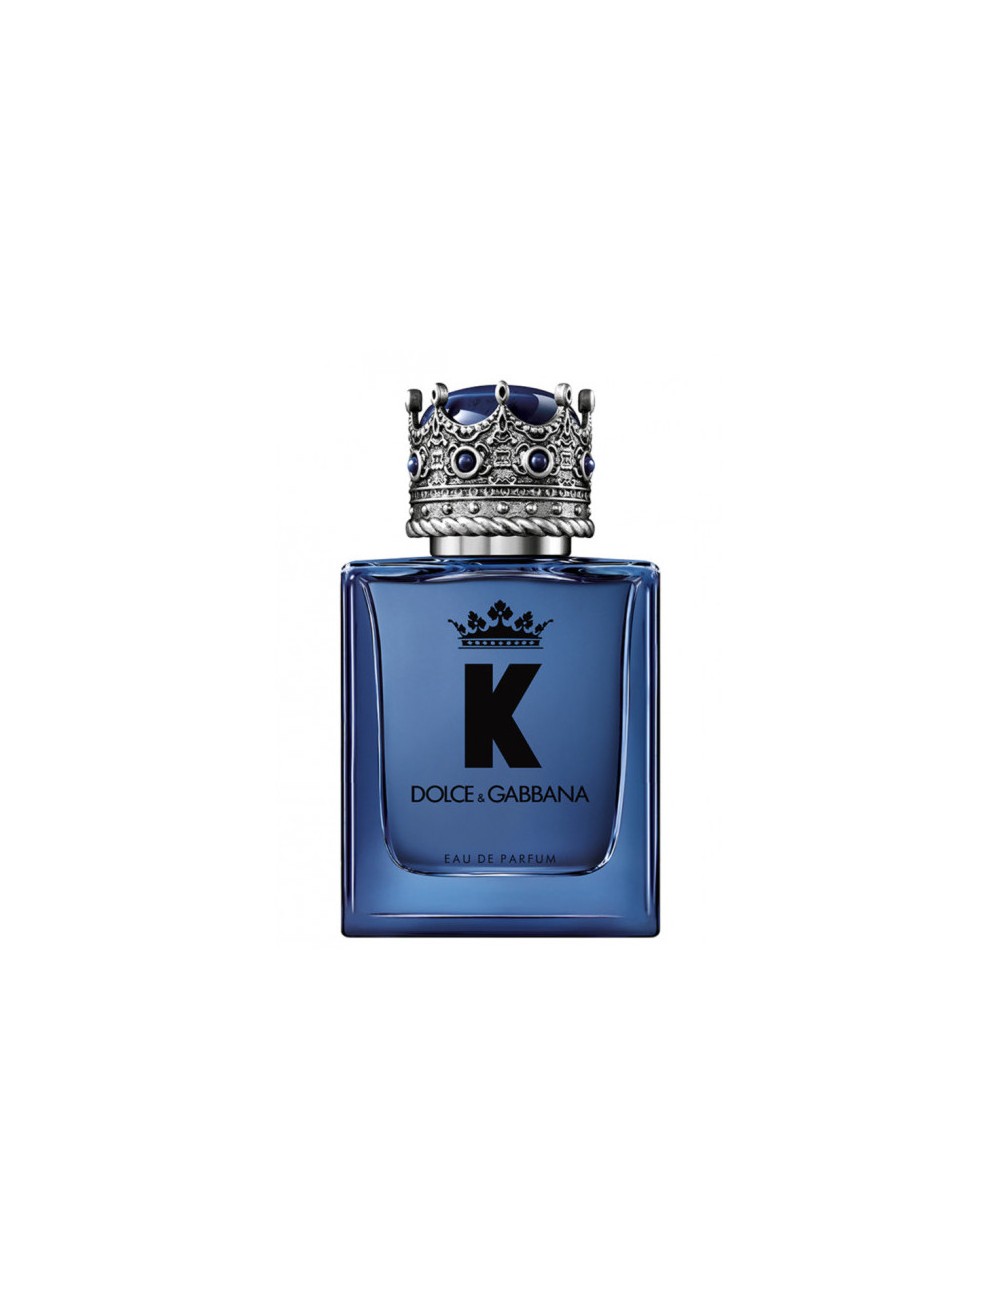 K BY DOLCE&GABBANA eau de parfum vaporisateur 100 ml NE126261